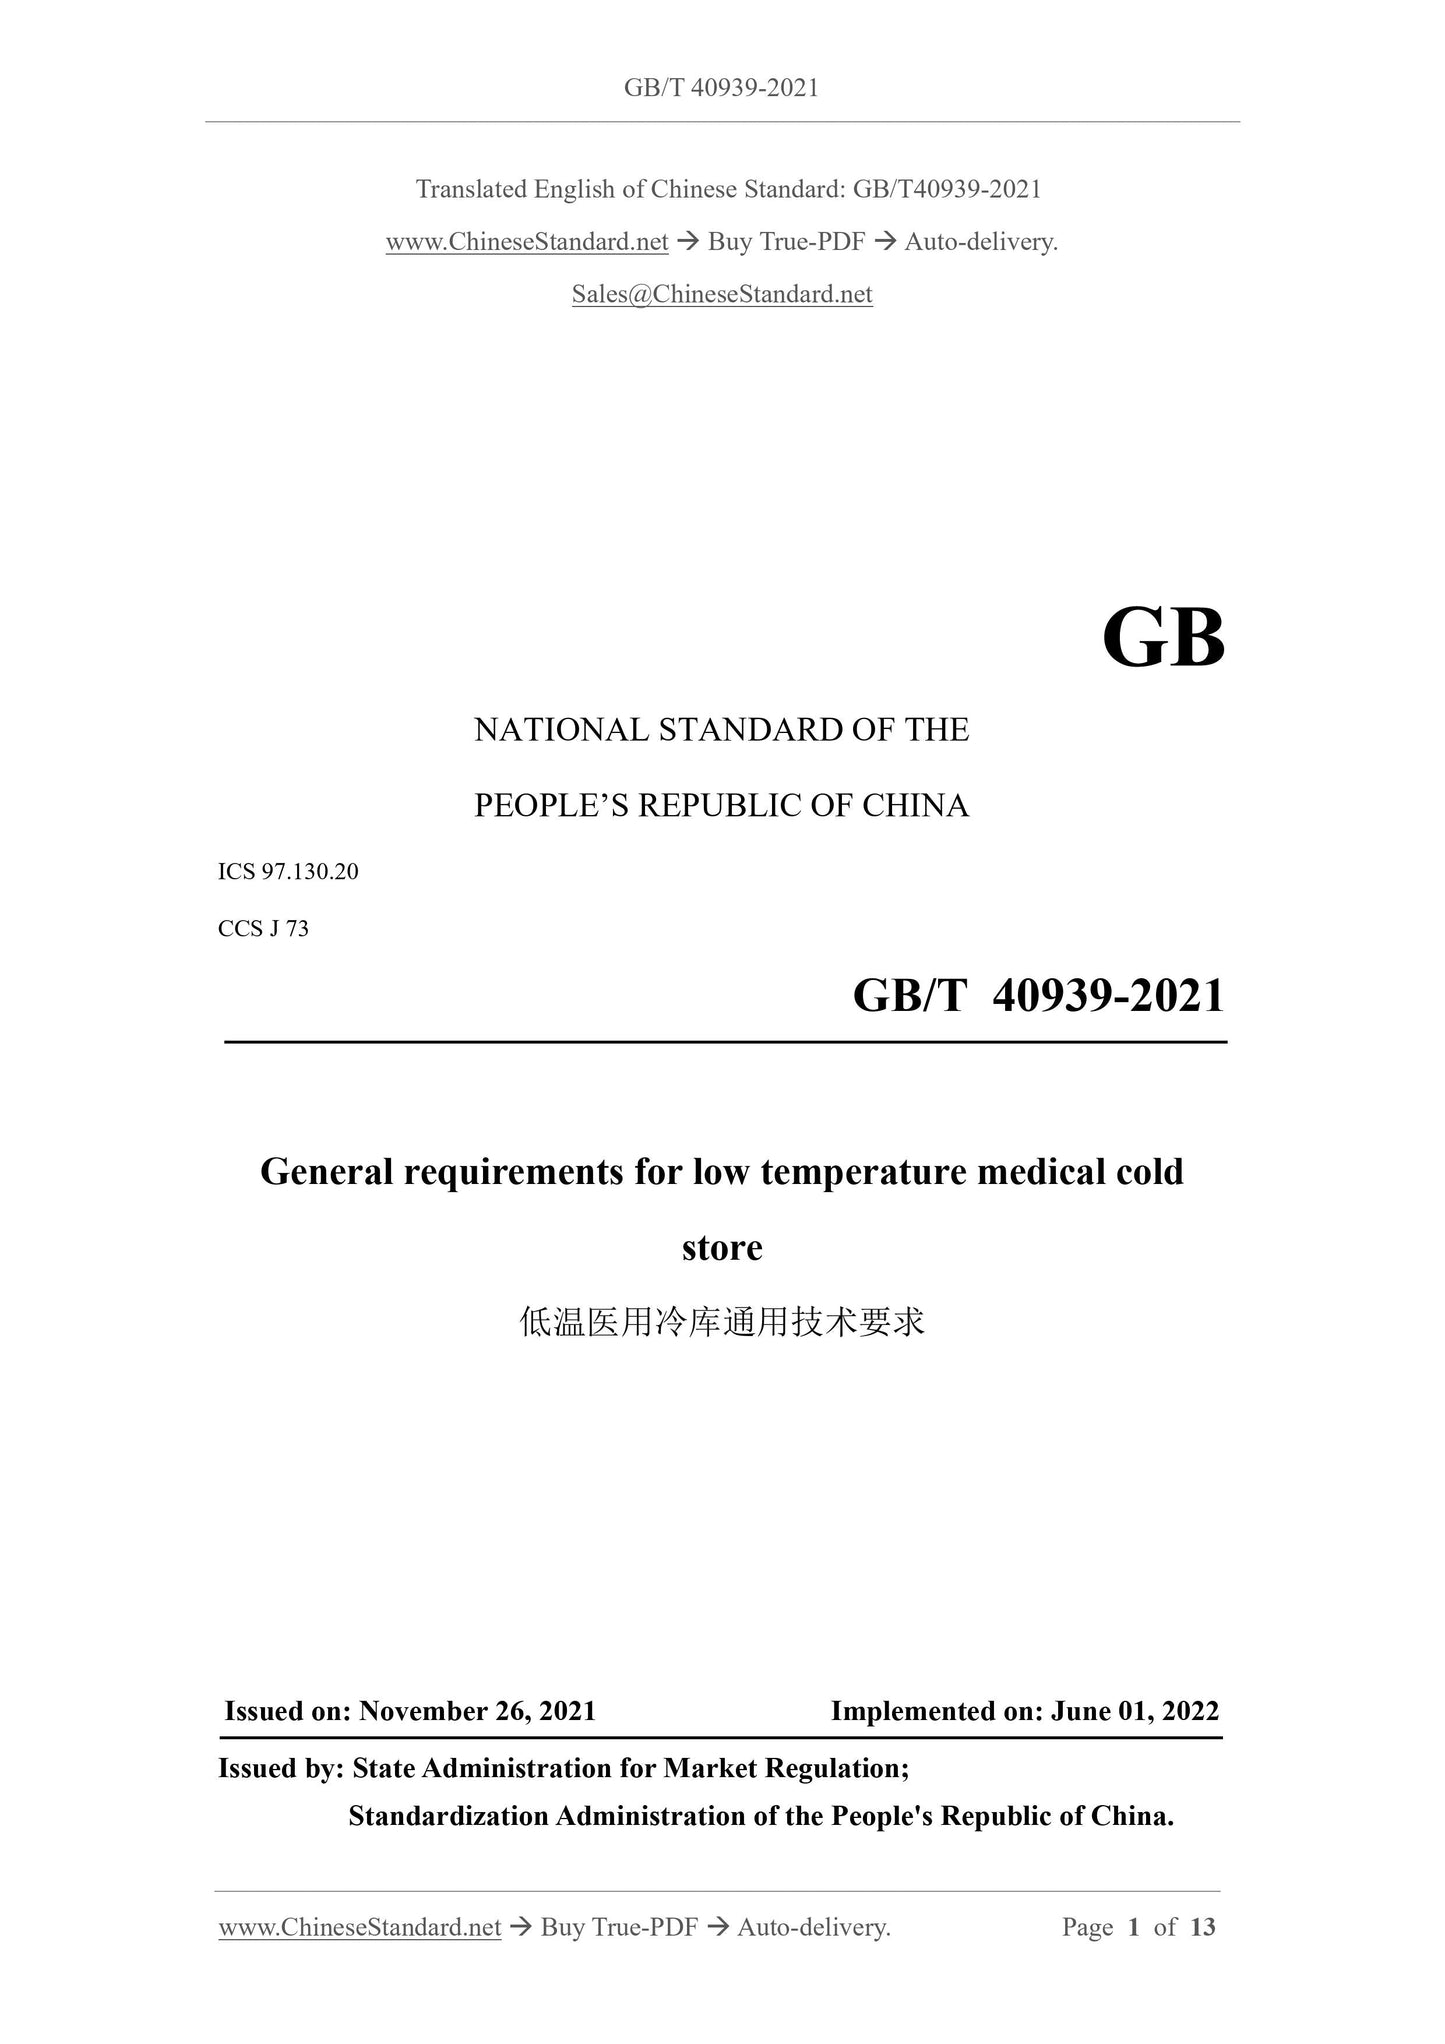 GBT40939-2021 Page 1